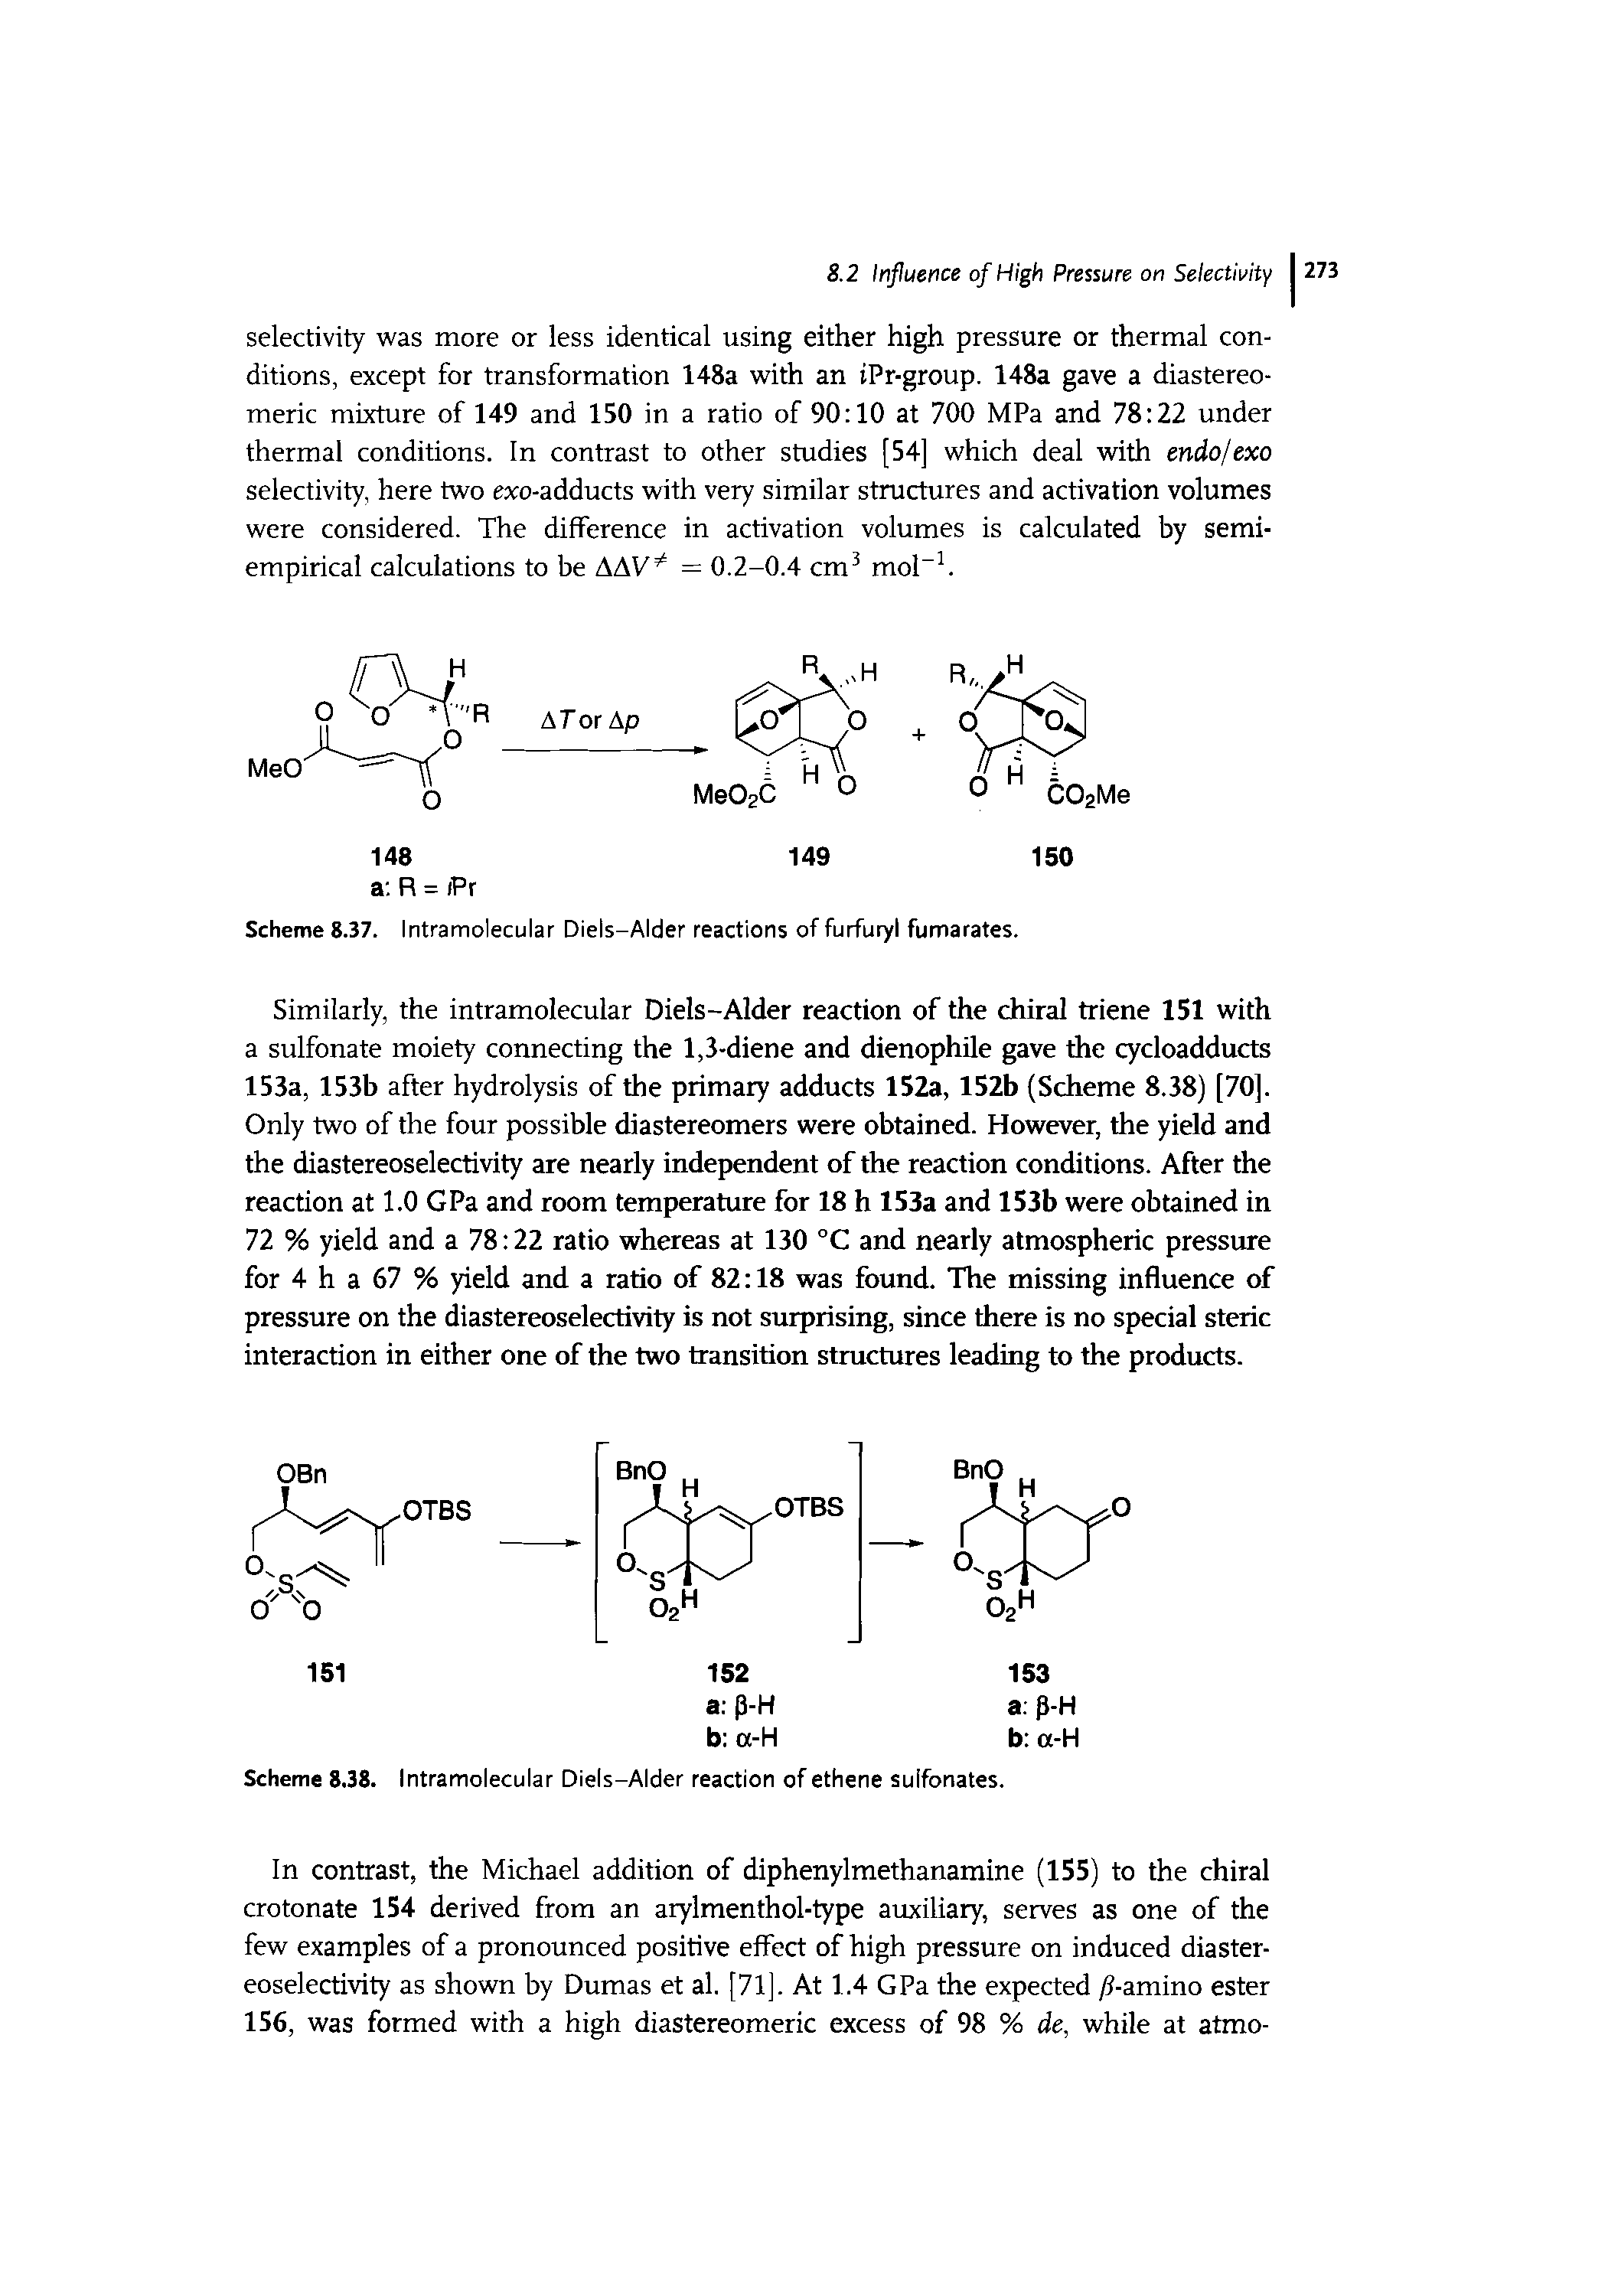 Scheme 8.37. Intramolecular Diels-Alder reactions of furfuryl fumarates.